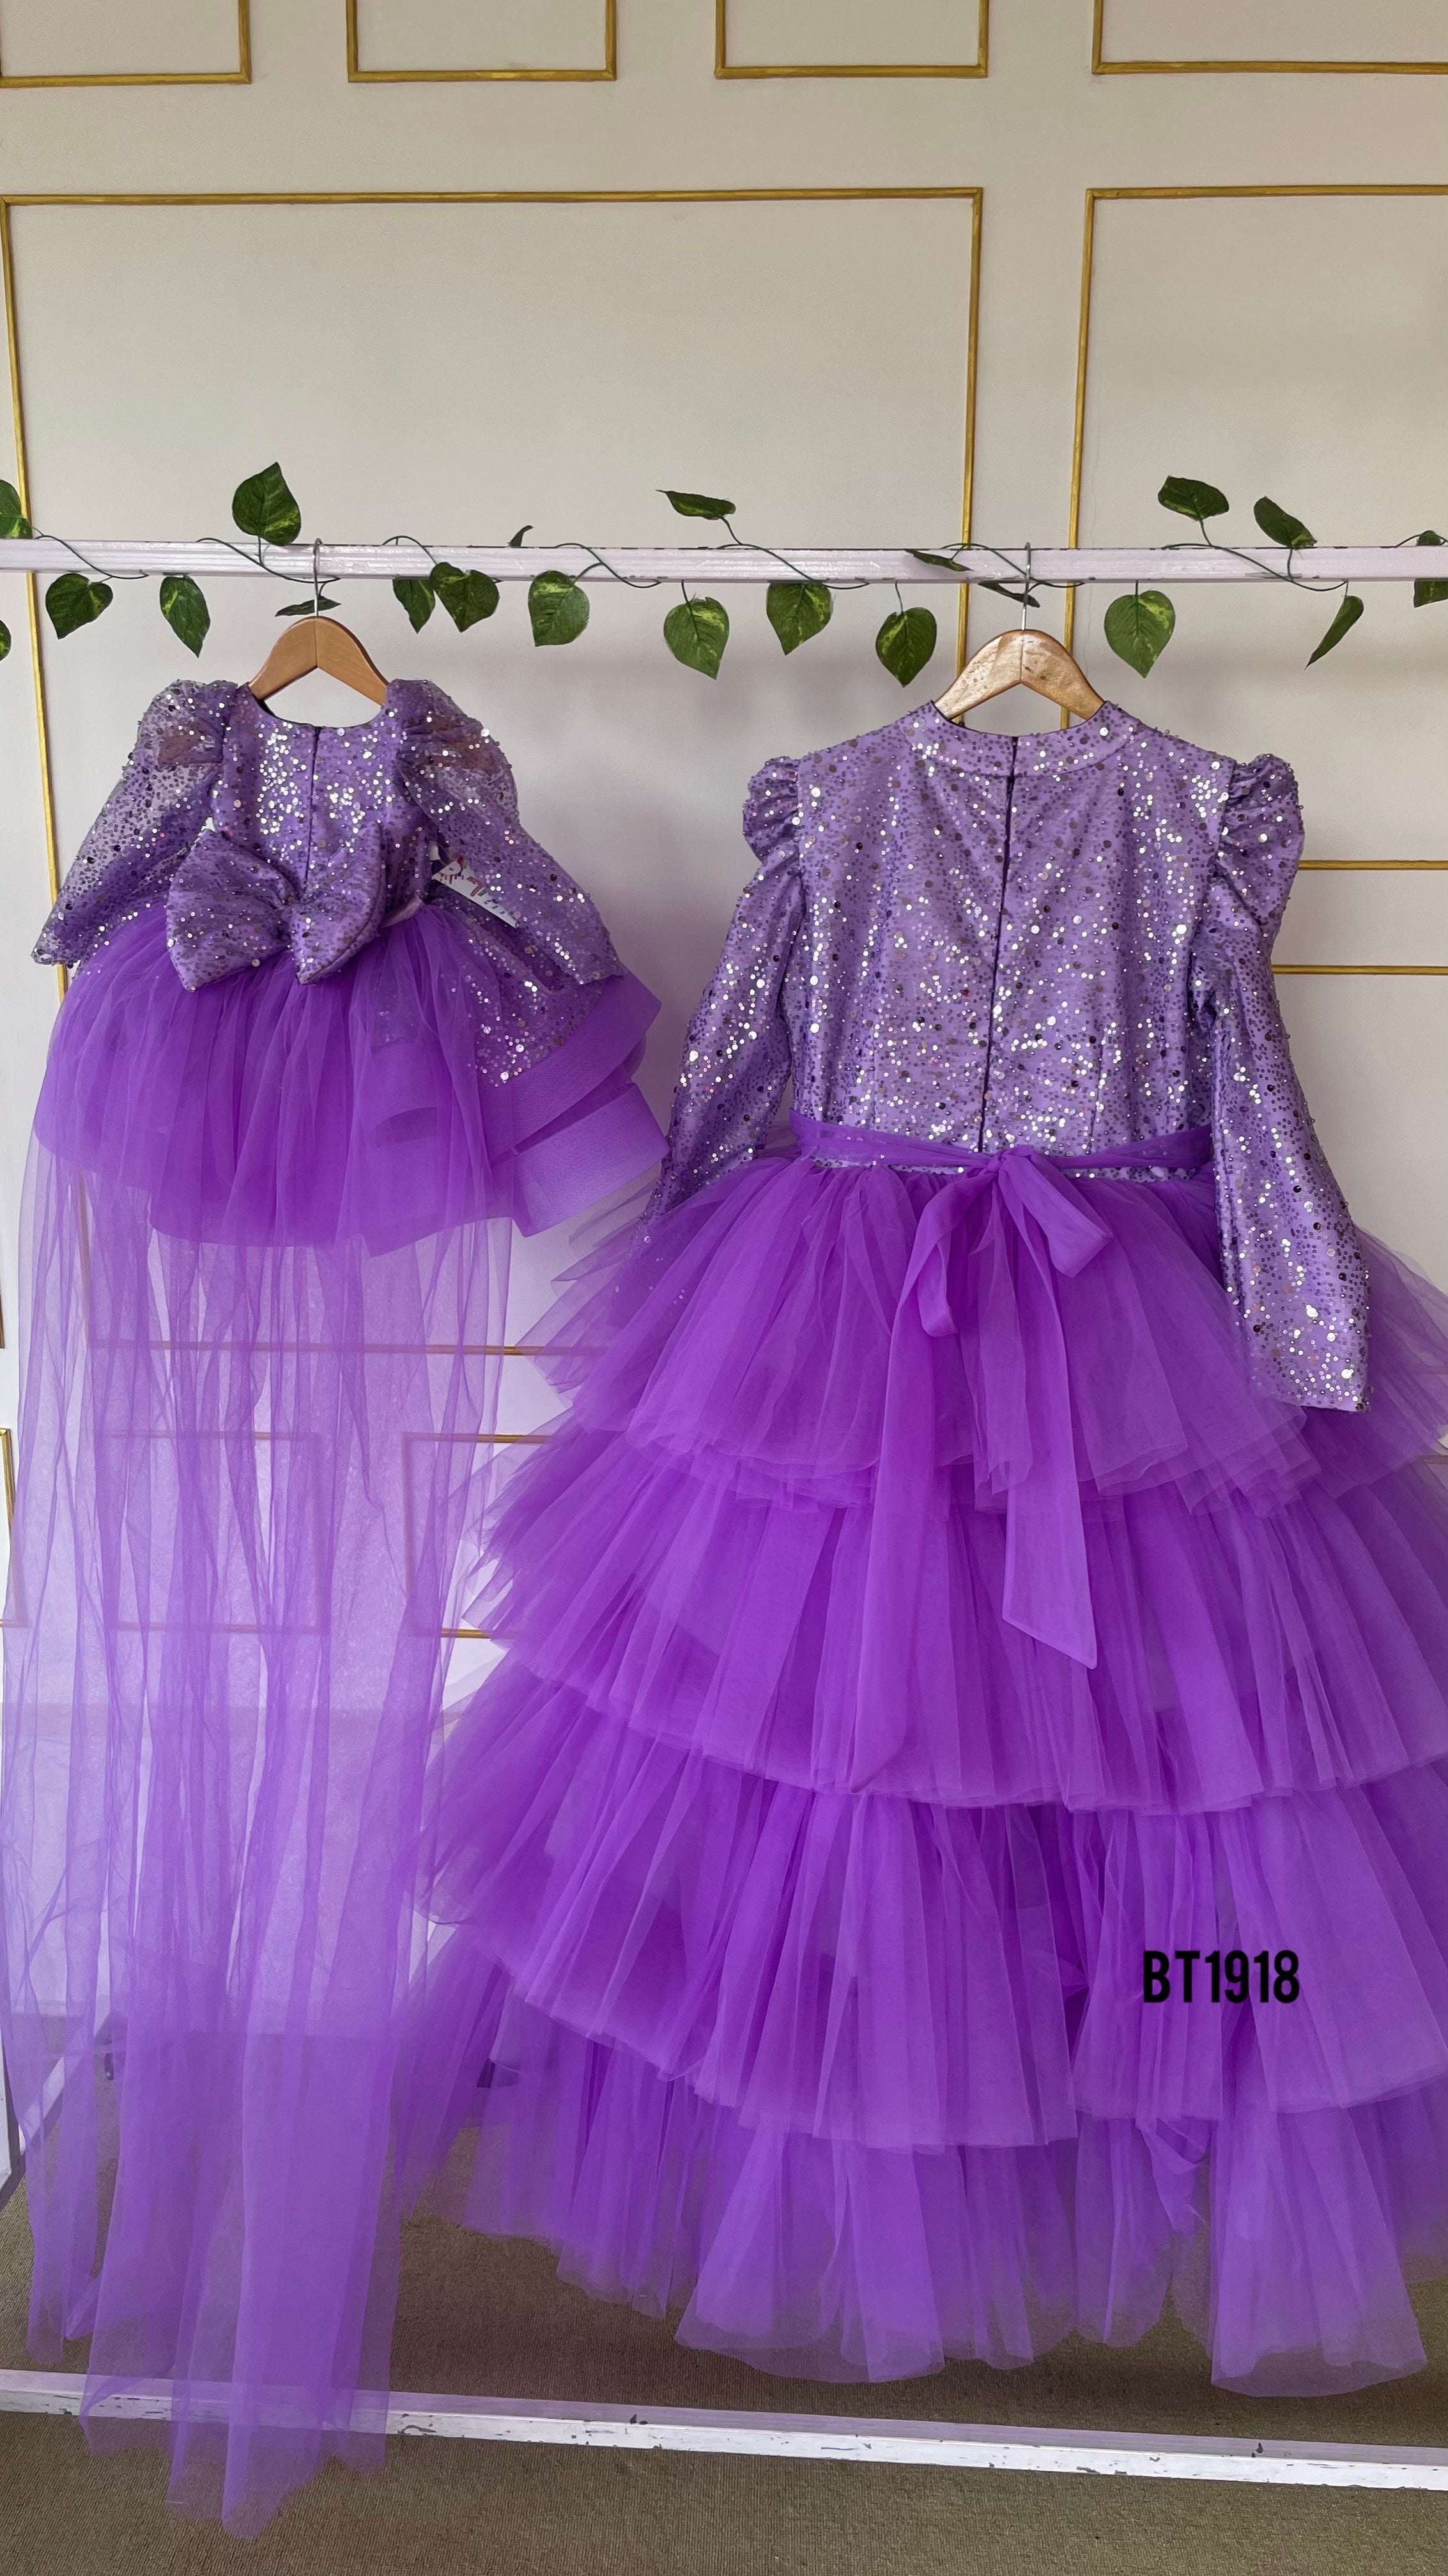 BT1918 Lavender Love - Mom & Baby Combo Dress